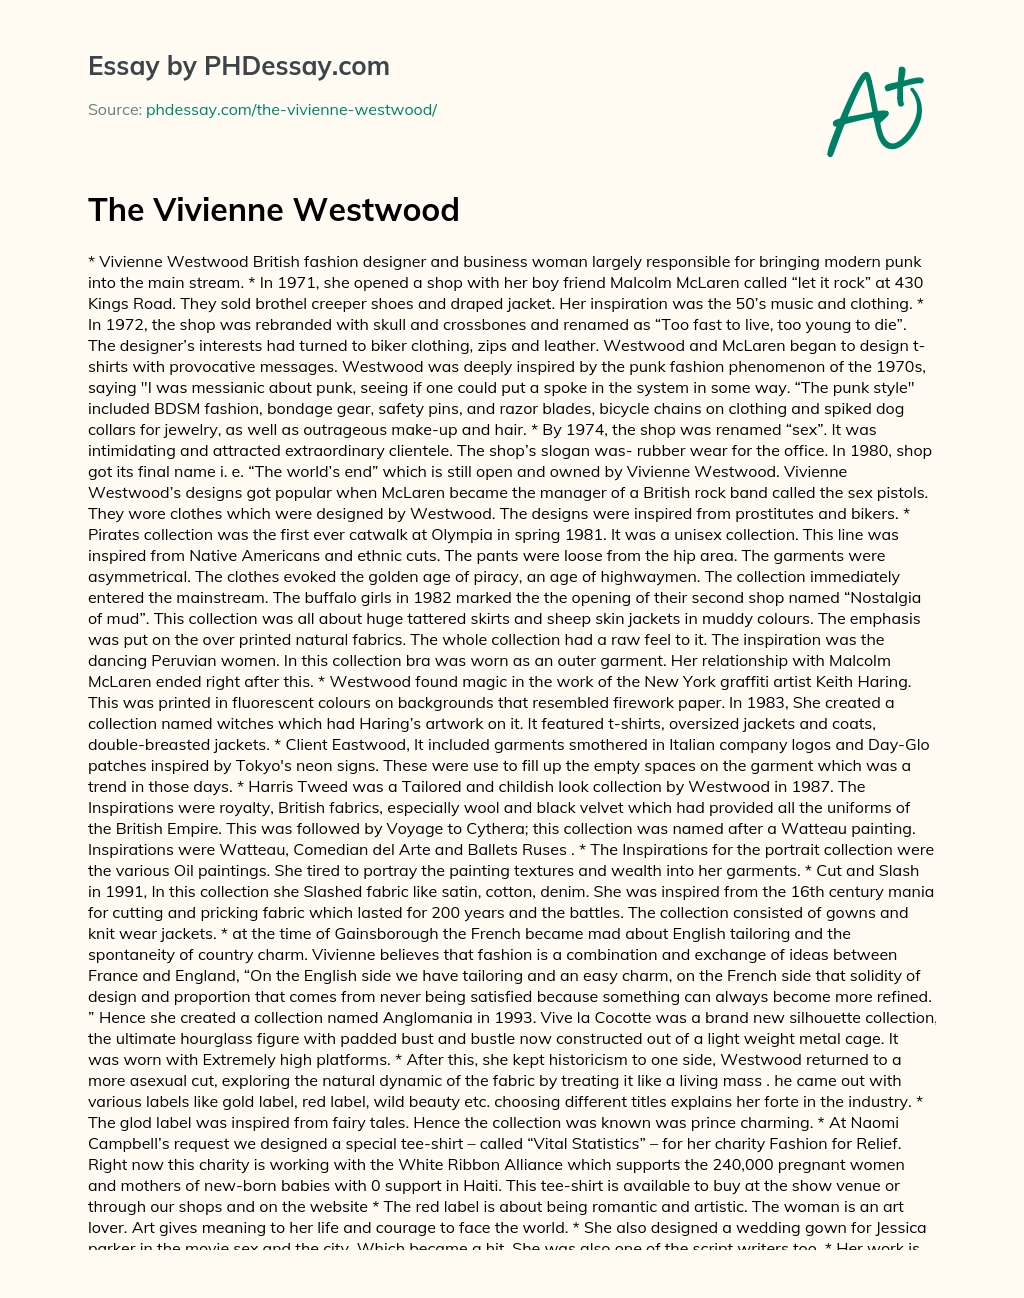 The Vivienne Westwood essay